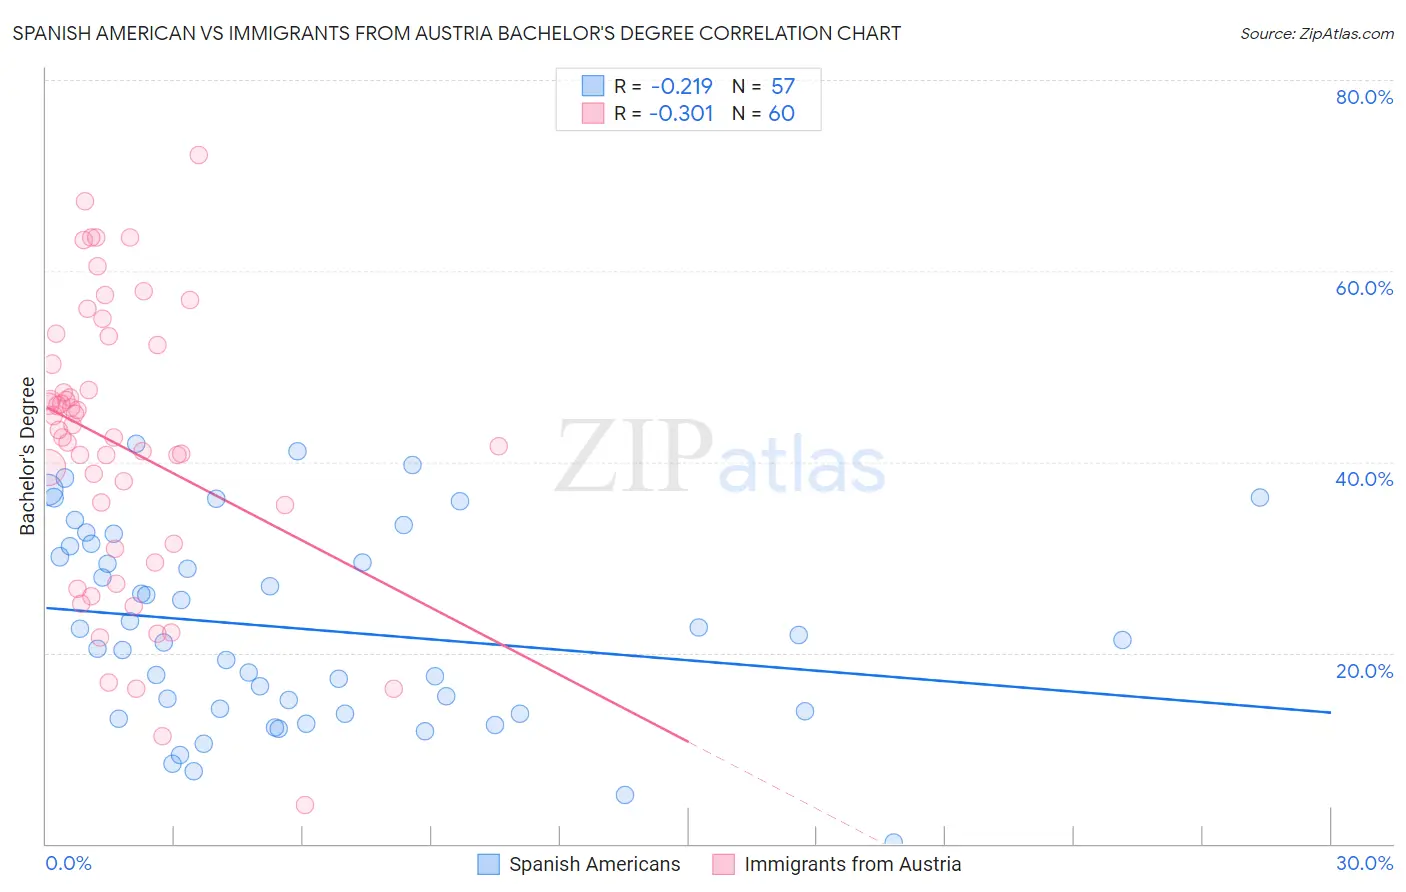 Spanish American vs Immigrants from Austria Bachelor's Degree